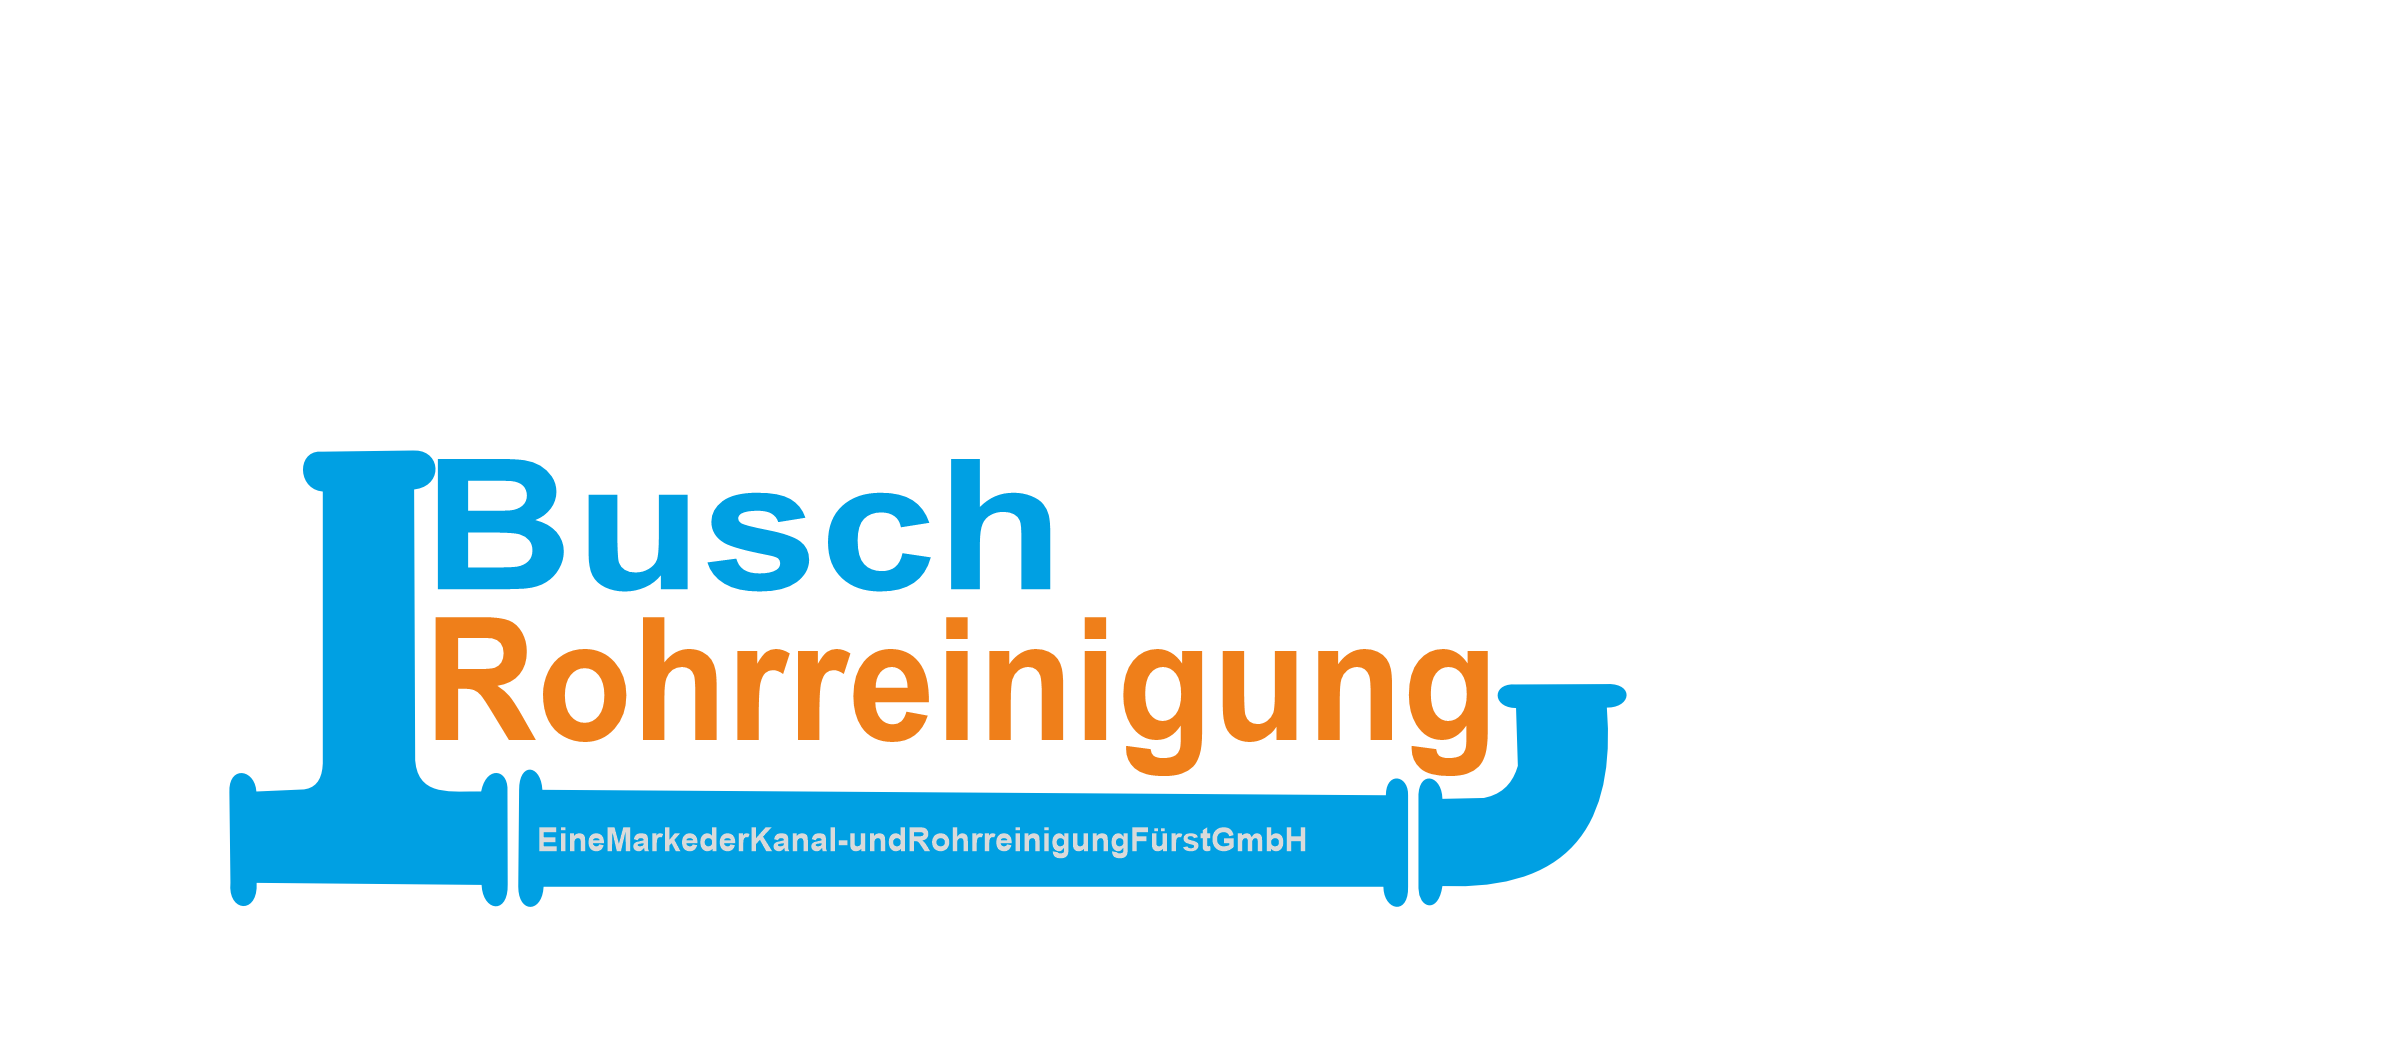 Logo Rohrreinigung Eschborn